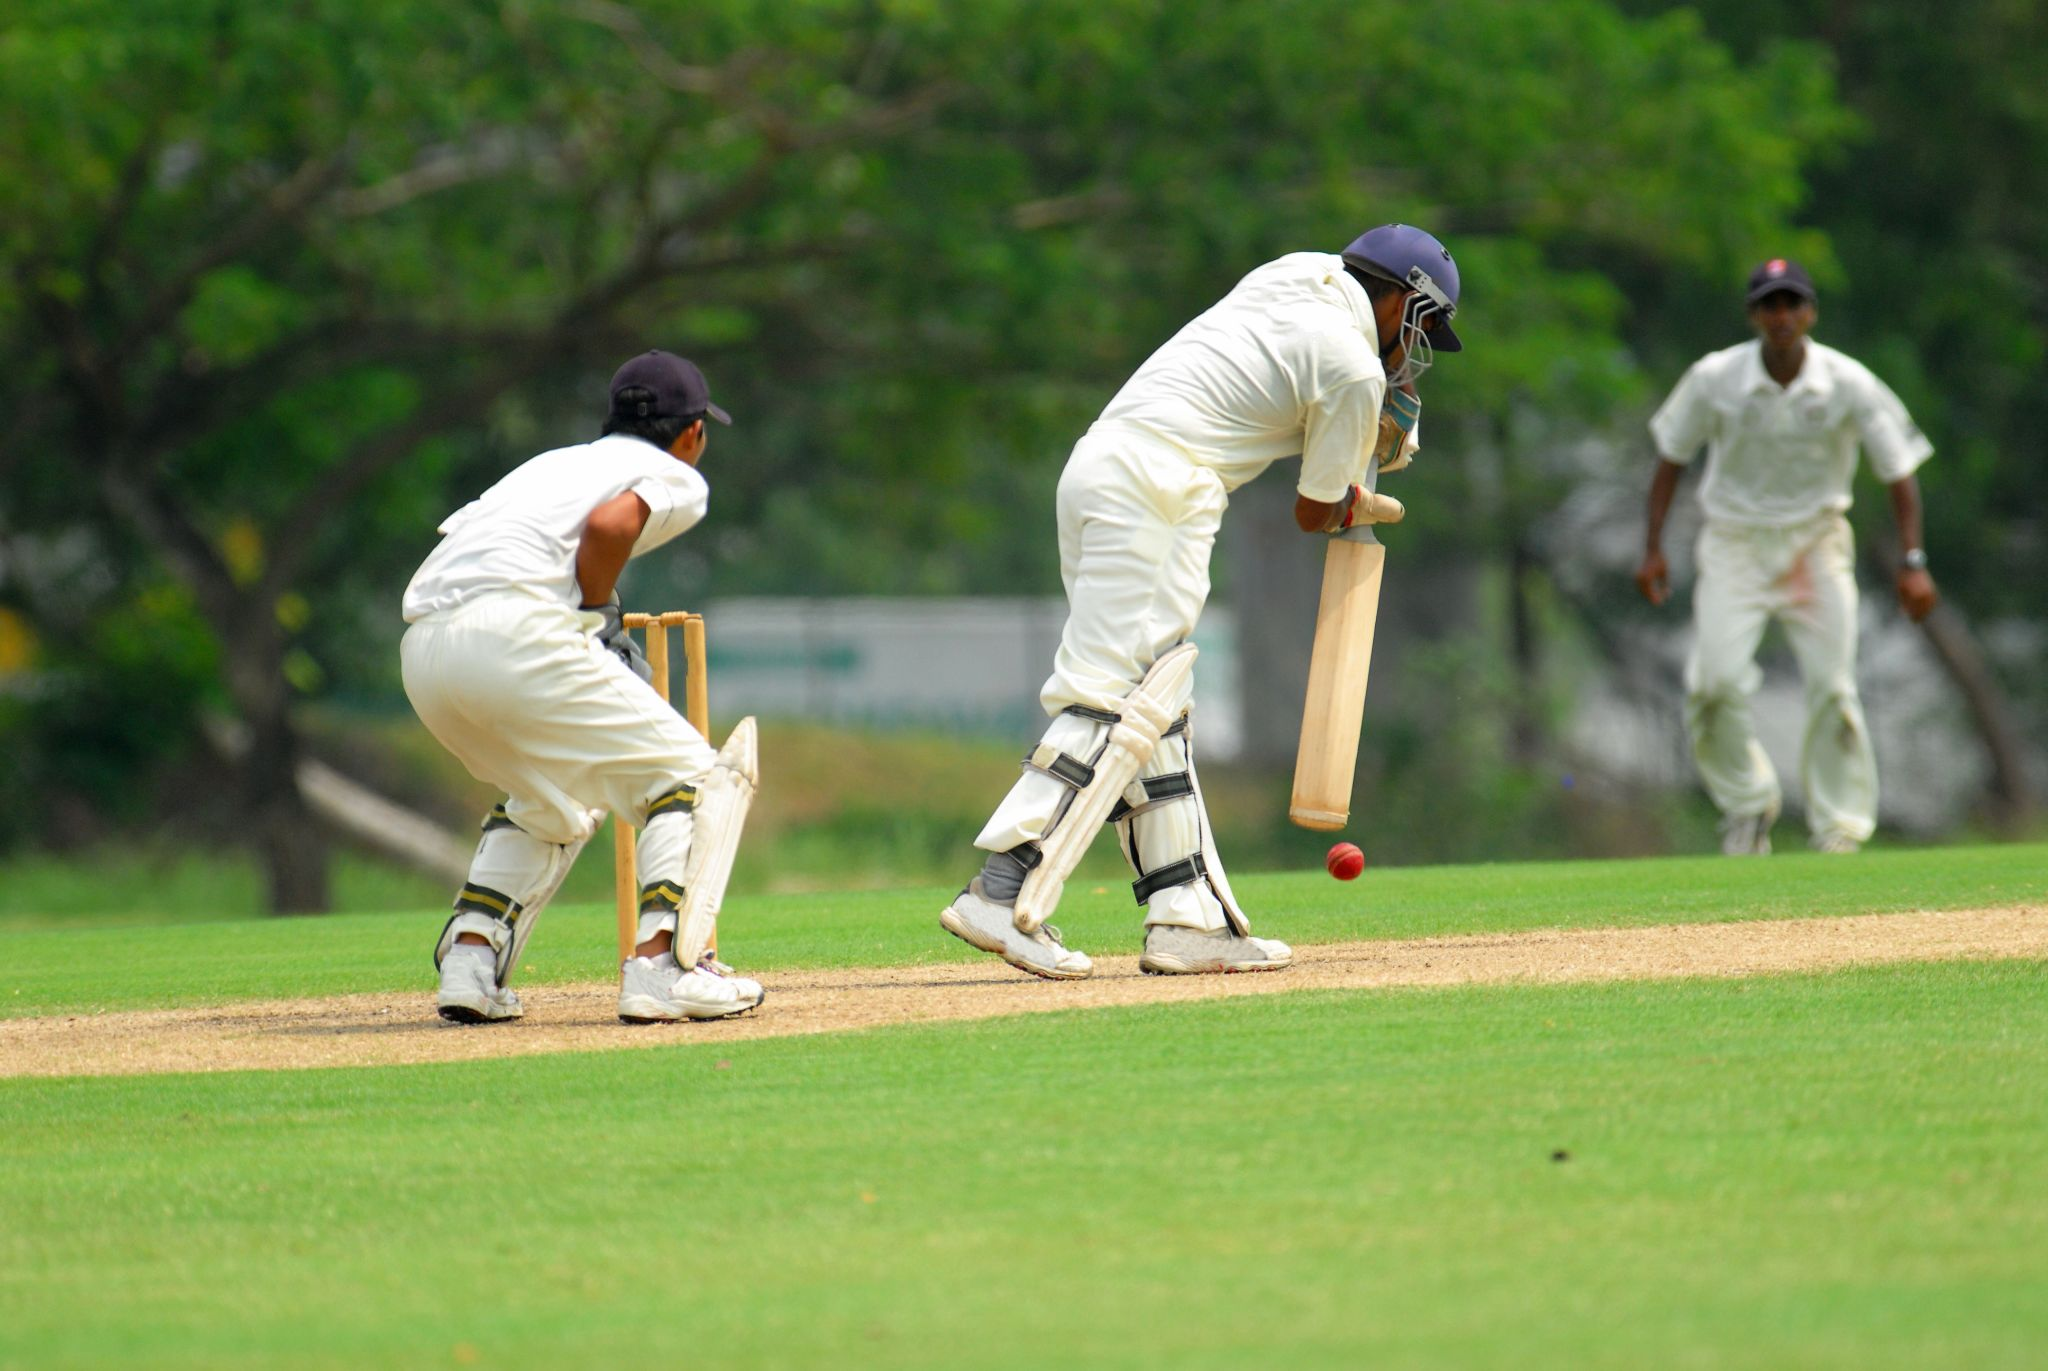 Cricket batsmen during a game